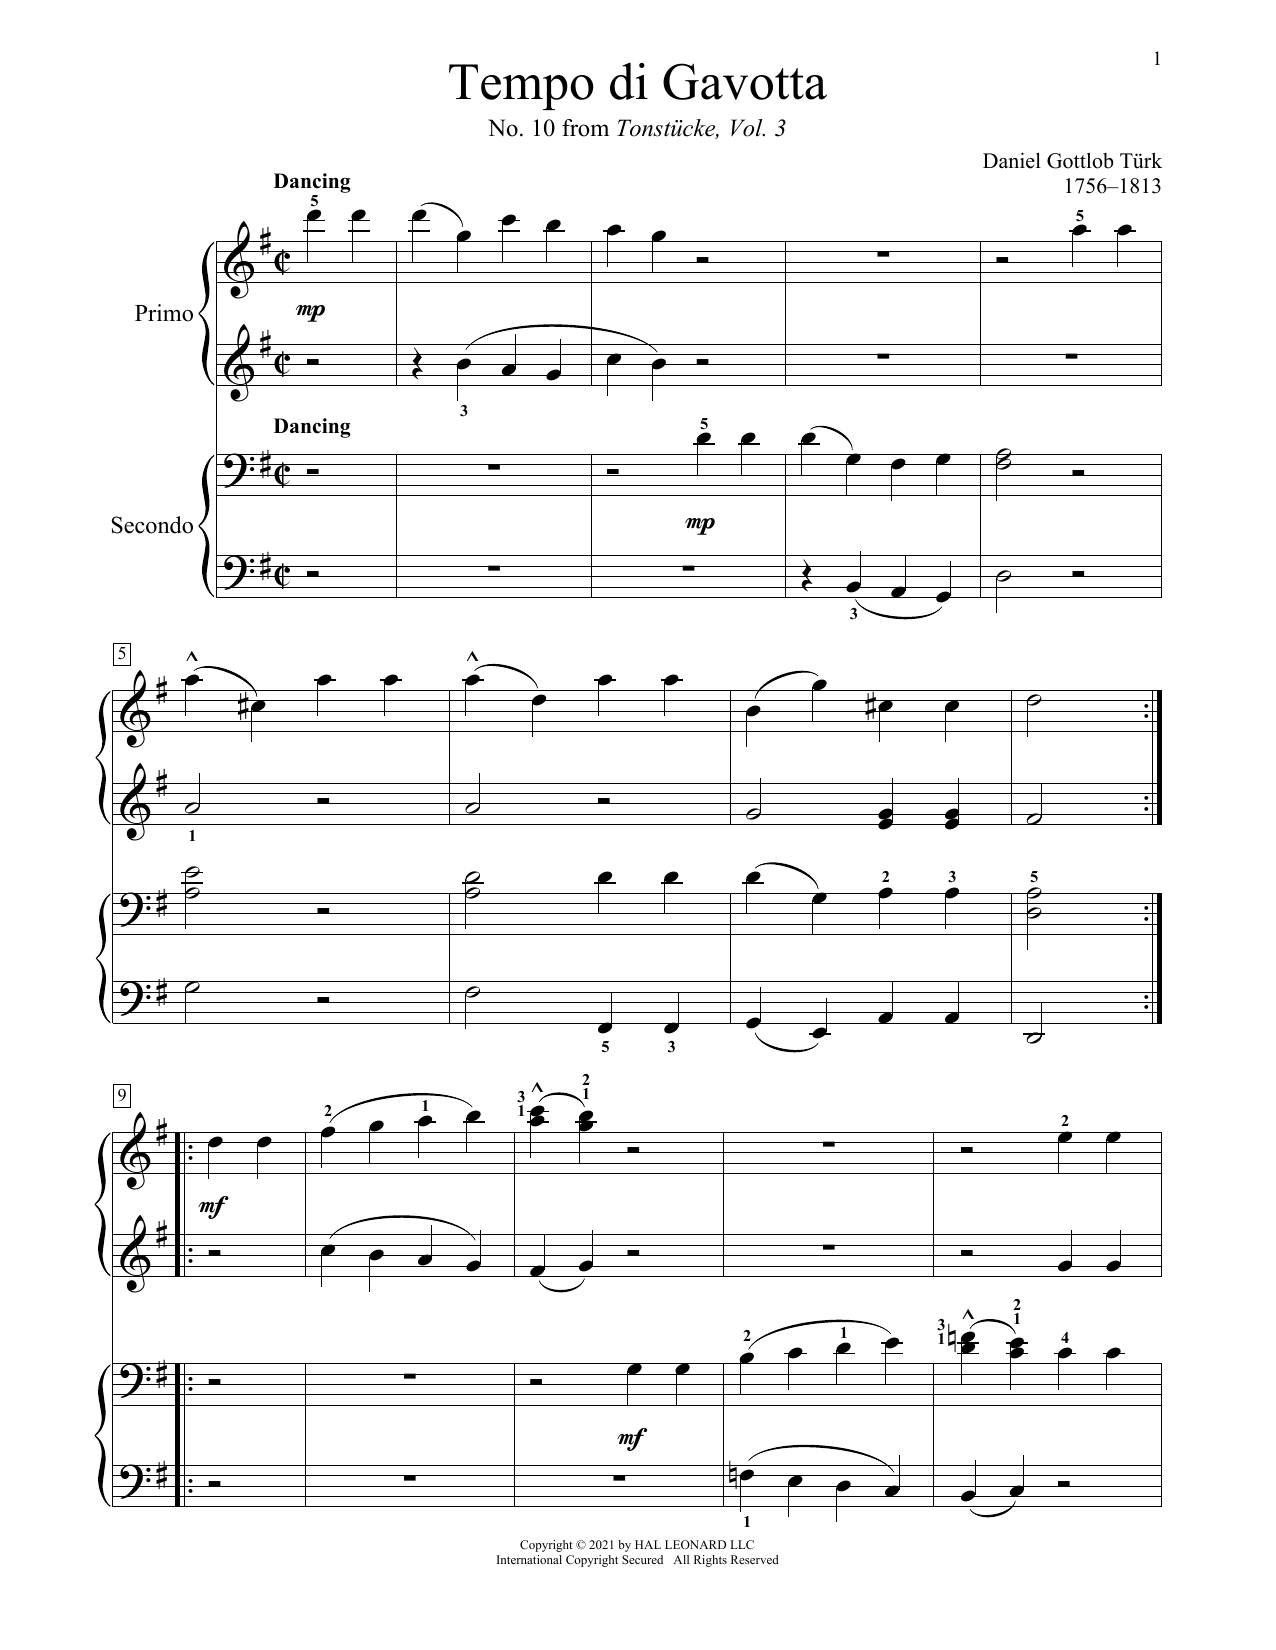 Daniel Gottlob Turk Tempo Di Gavotta (From Tonstucke, Vol. 3, No. 10) Sheet Music Notes & Chords for Piano Duet - Download or Print PDF